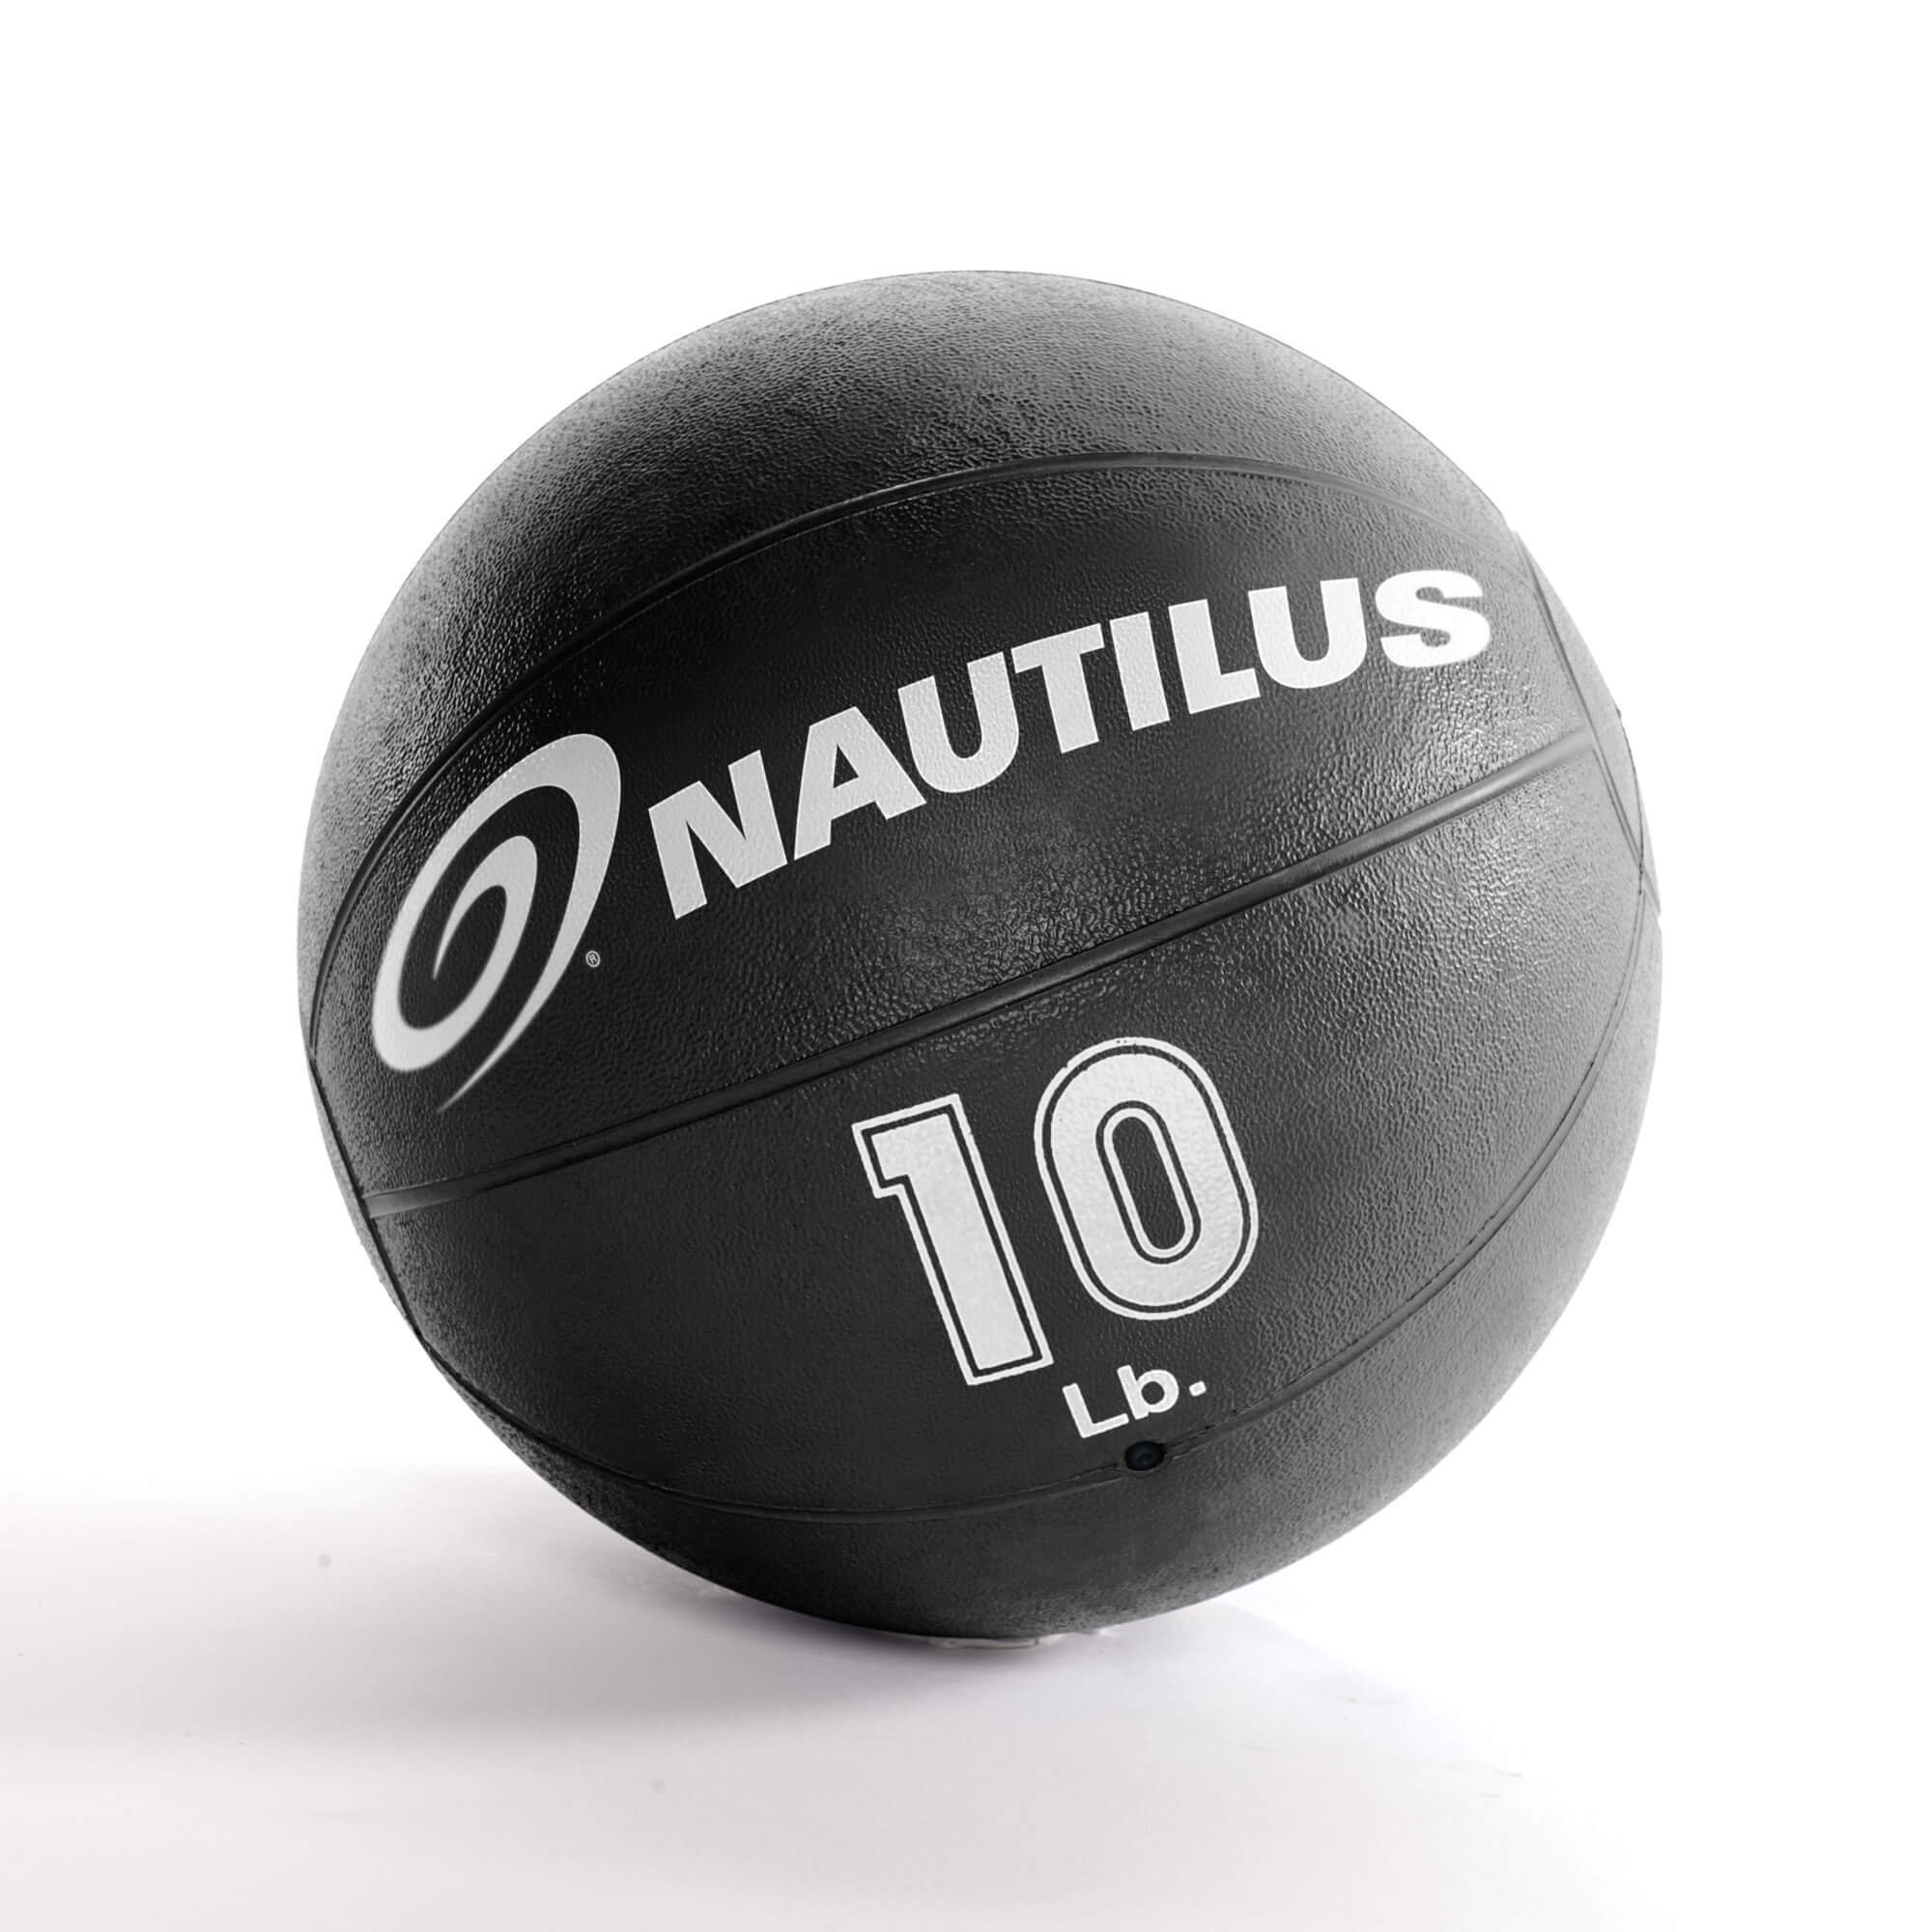 Nautilus 10 lb. Medicine Ball Bowflex